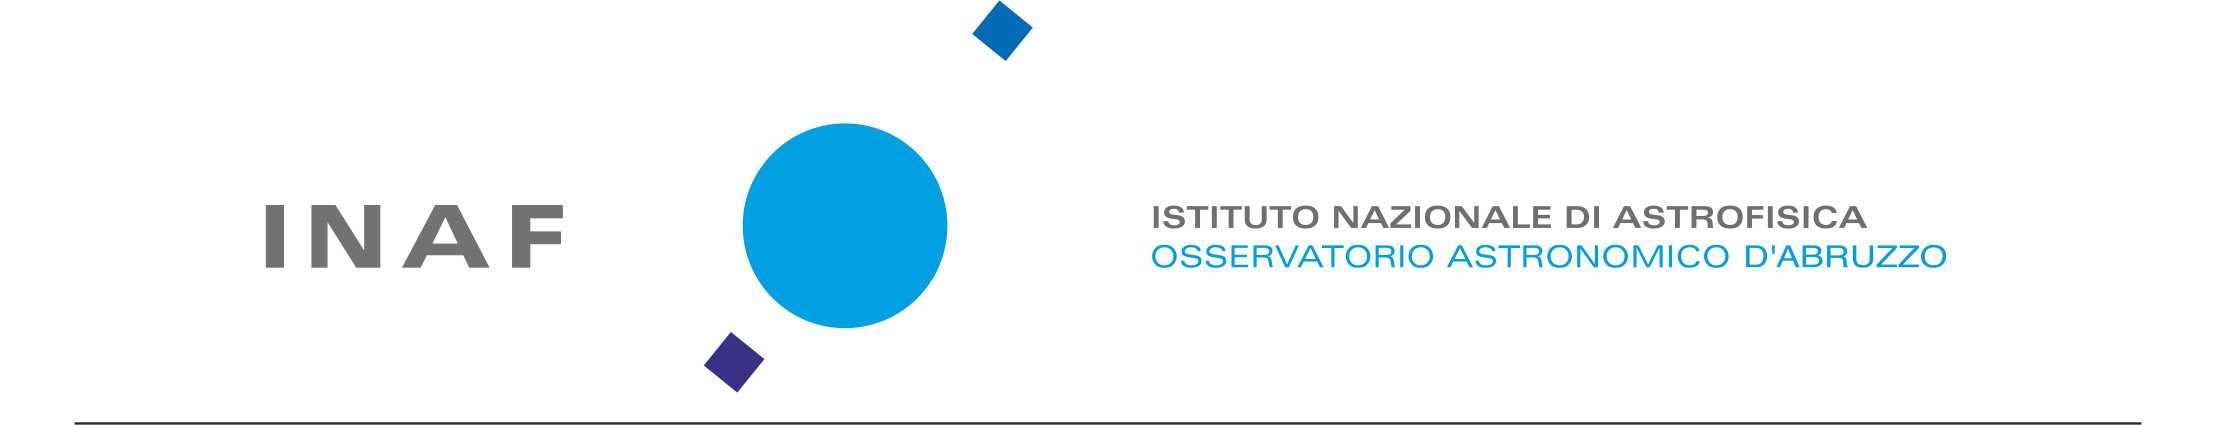 Osservatorio d'Abruzzo - INAF